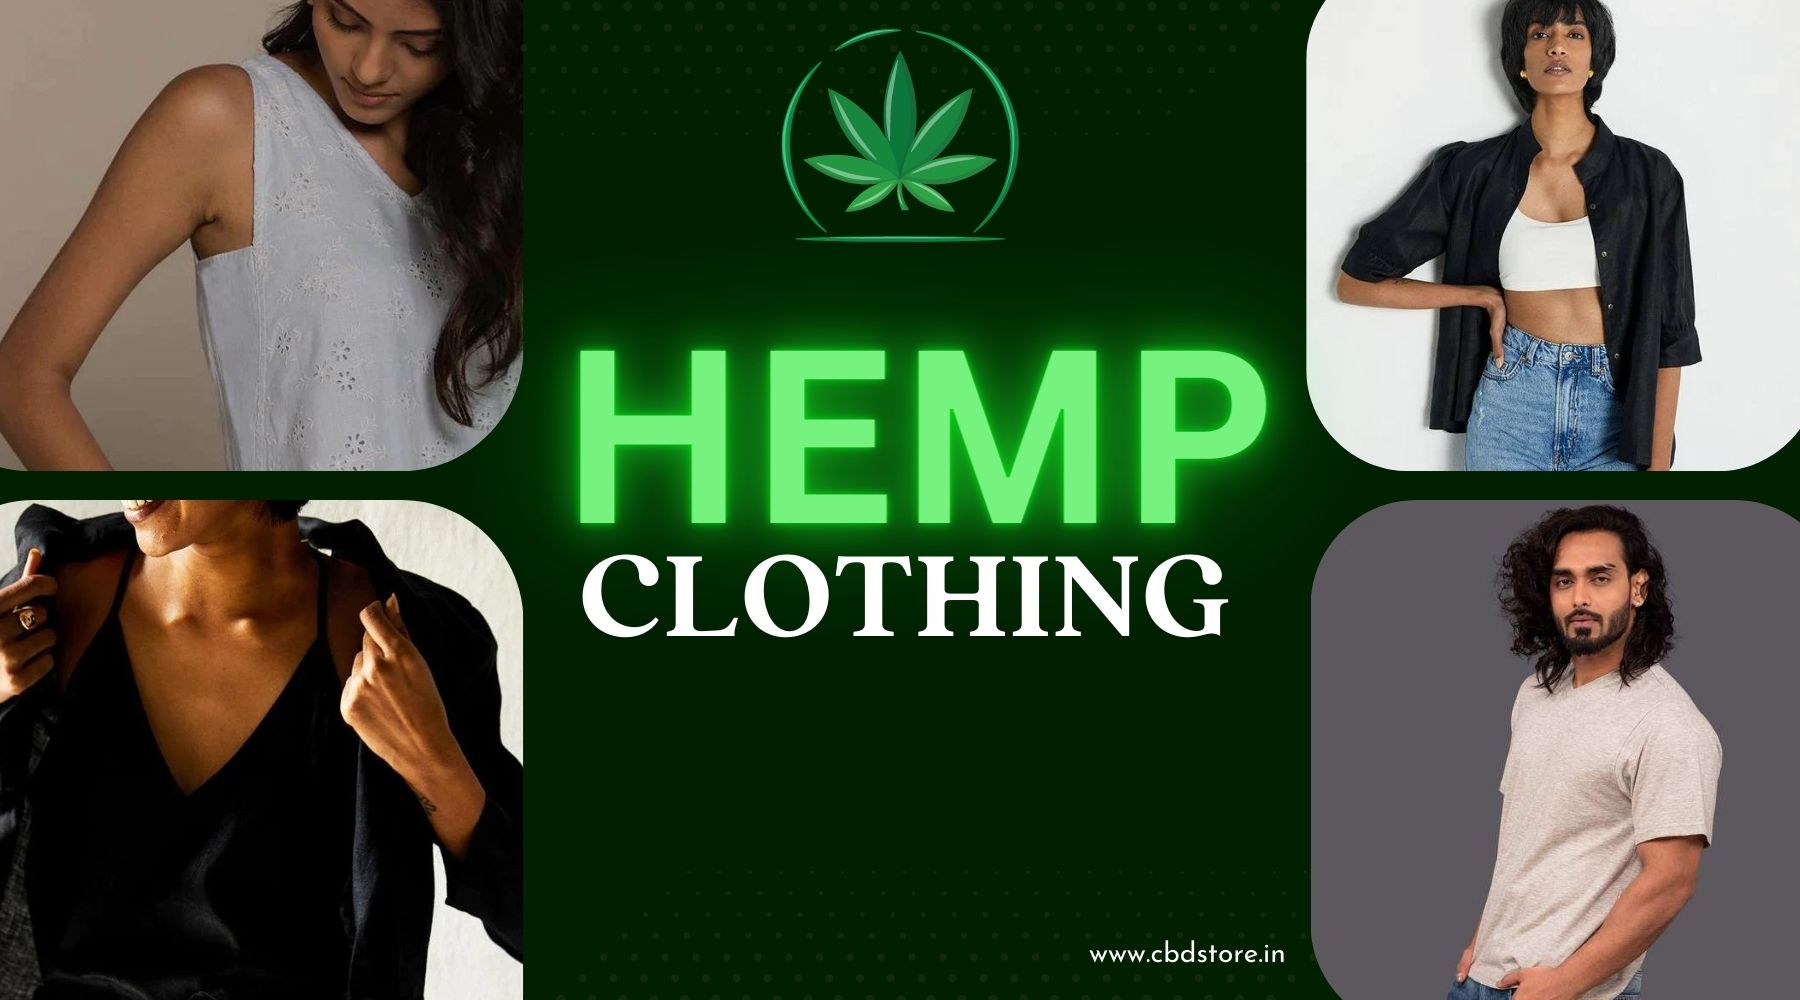 Hemp Clothing - An Amazing Fashion Choice! - CBD Store India